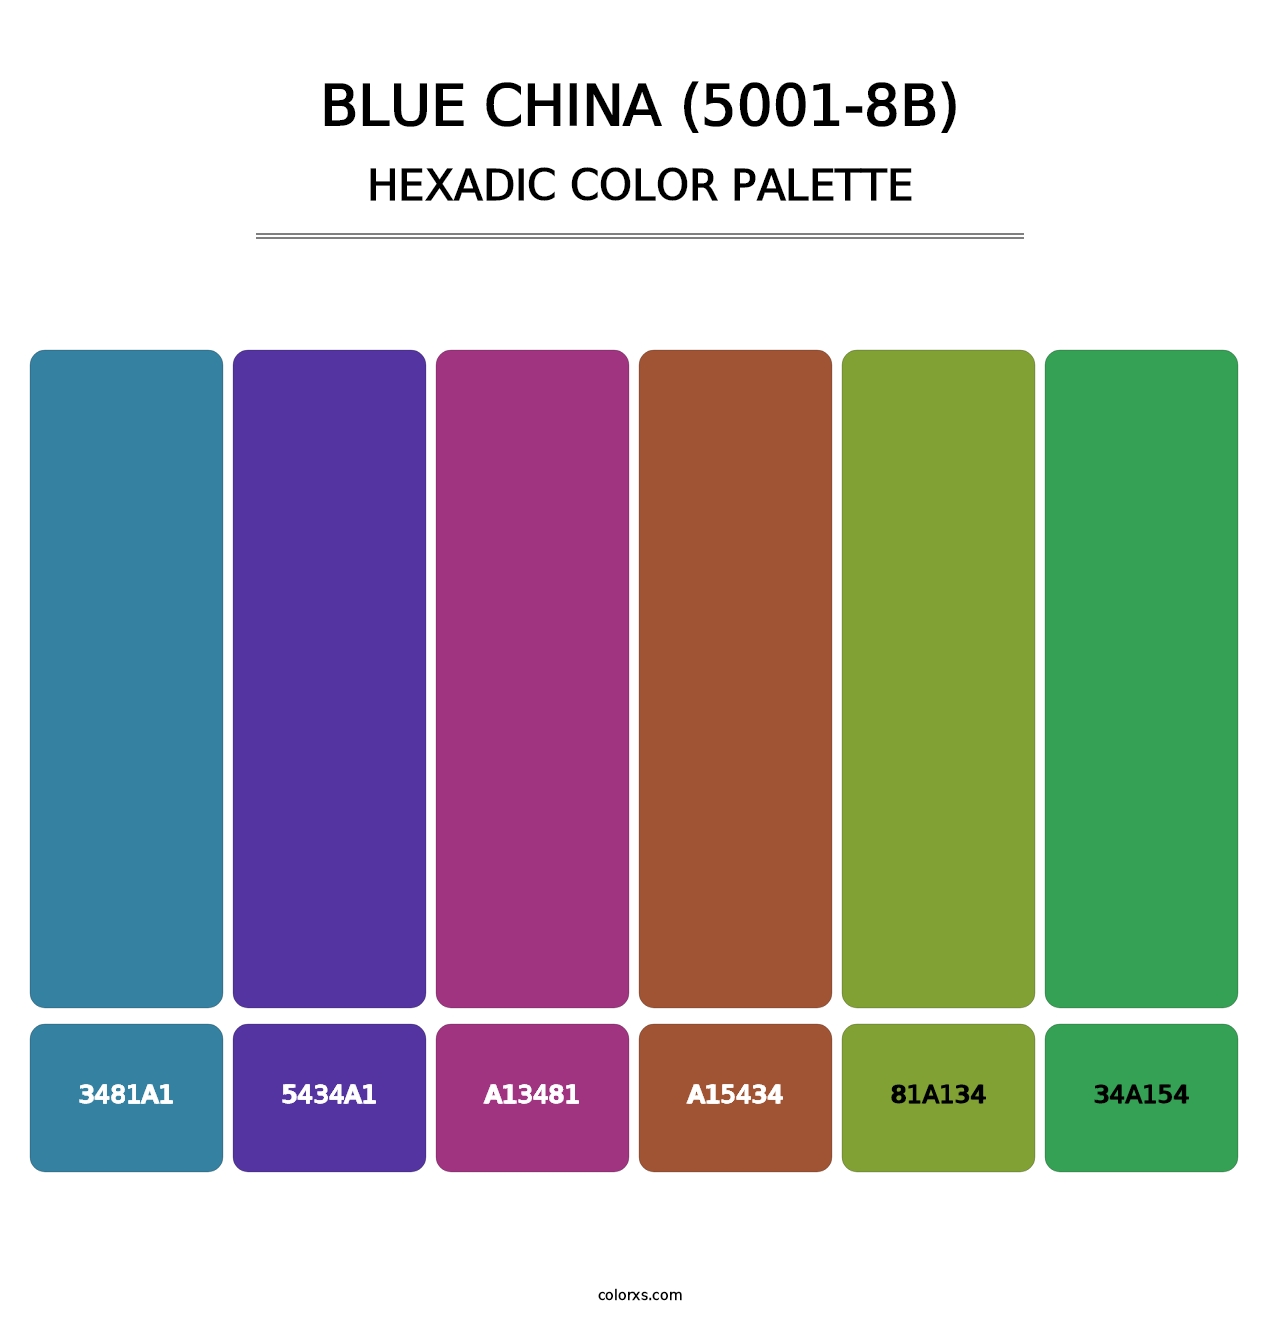 Blue China (5001-8B) - Hexadic Color Palette